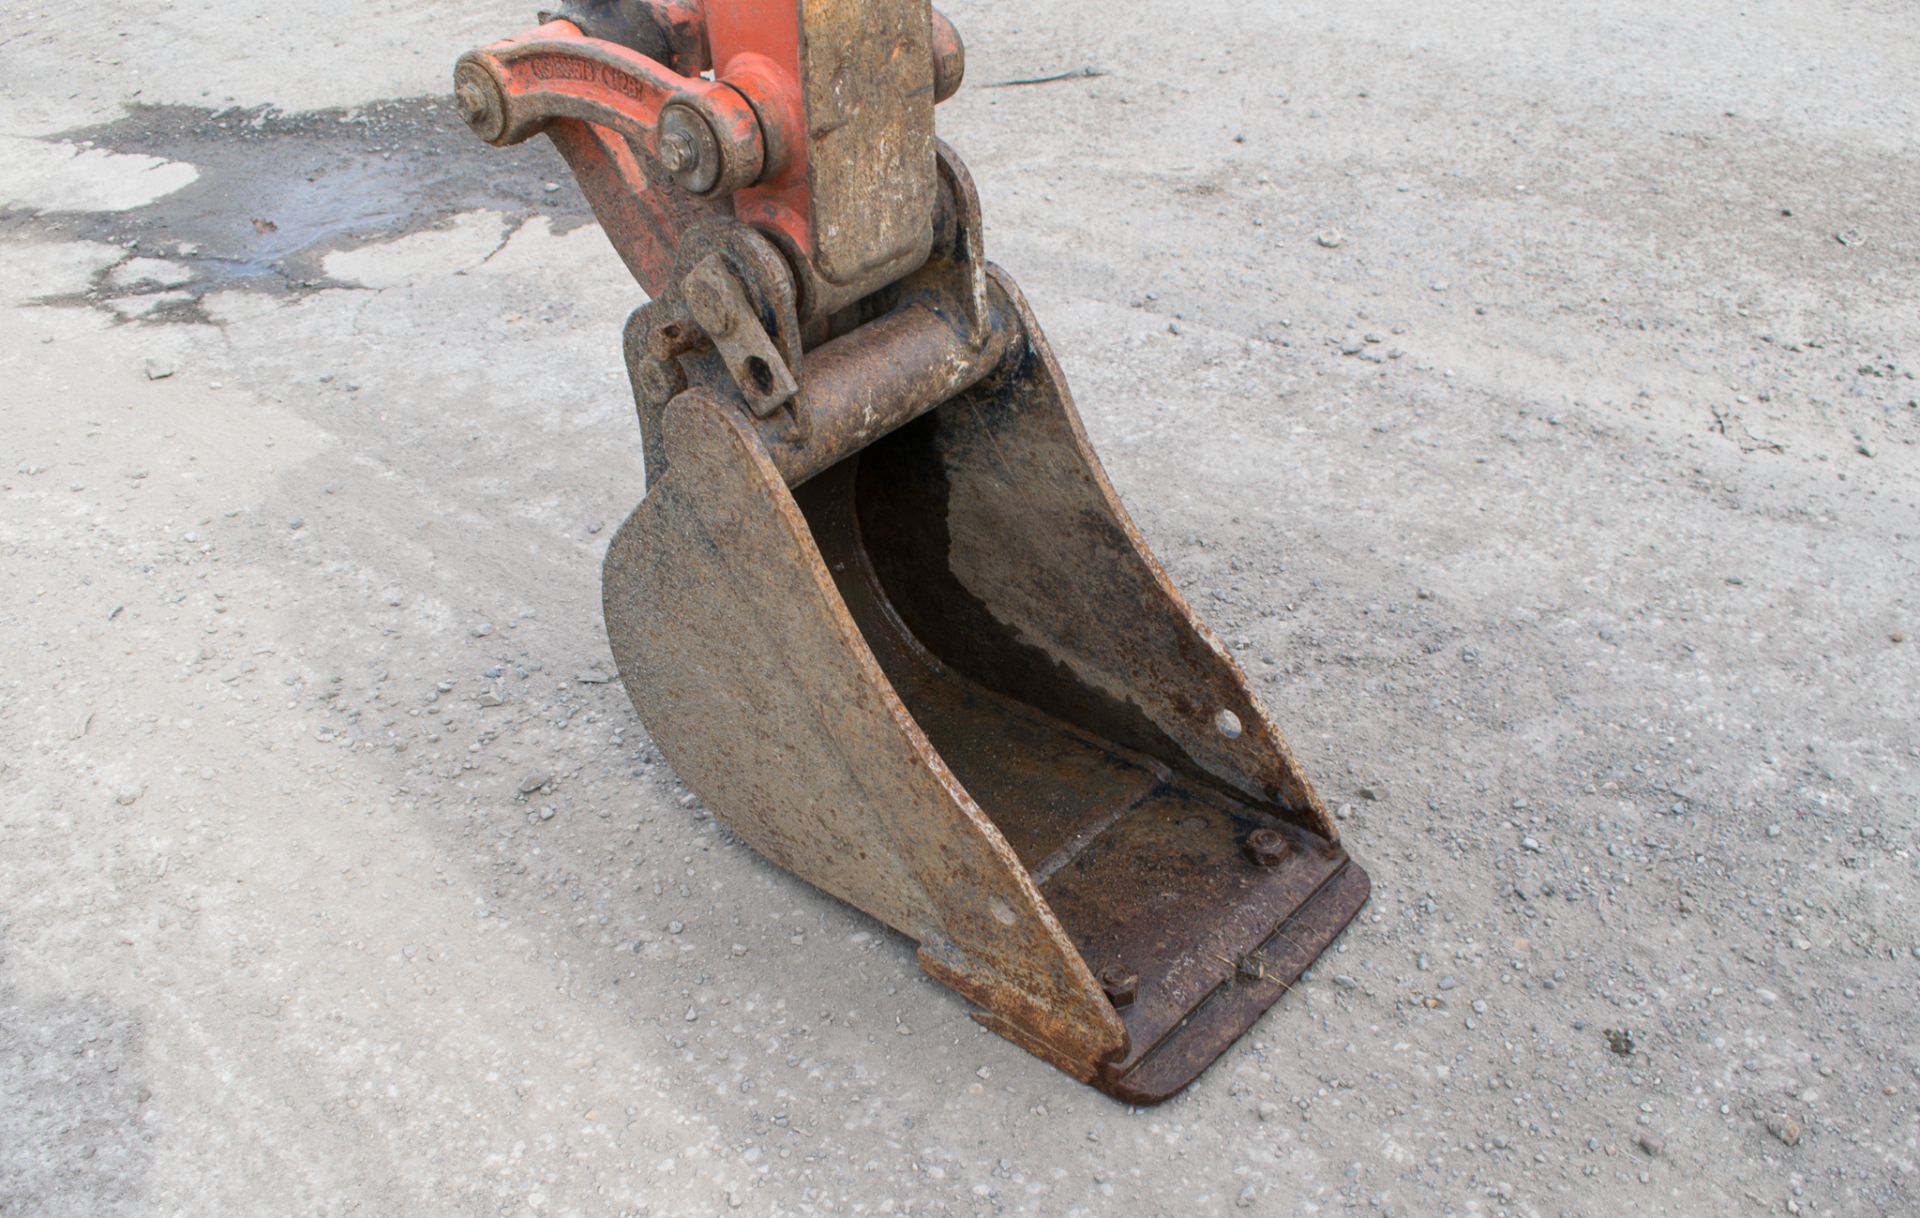 Kubota KX016-4 1.5 tonne rubber tracked mini excavator Year: S/N: 56667 Recorded Hours: 1544 - Image 9 of 13